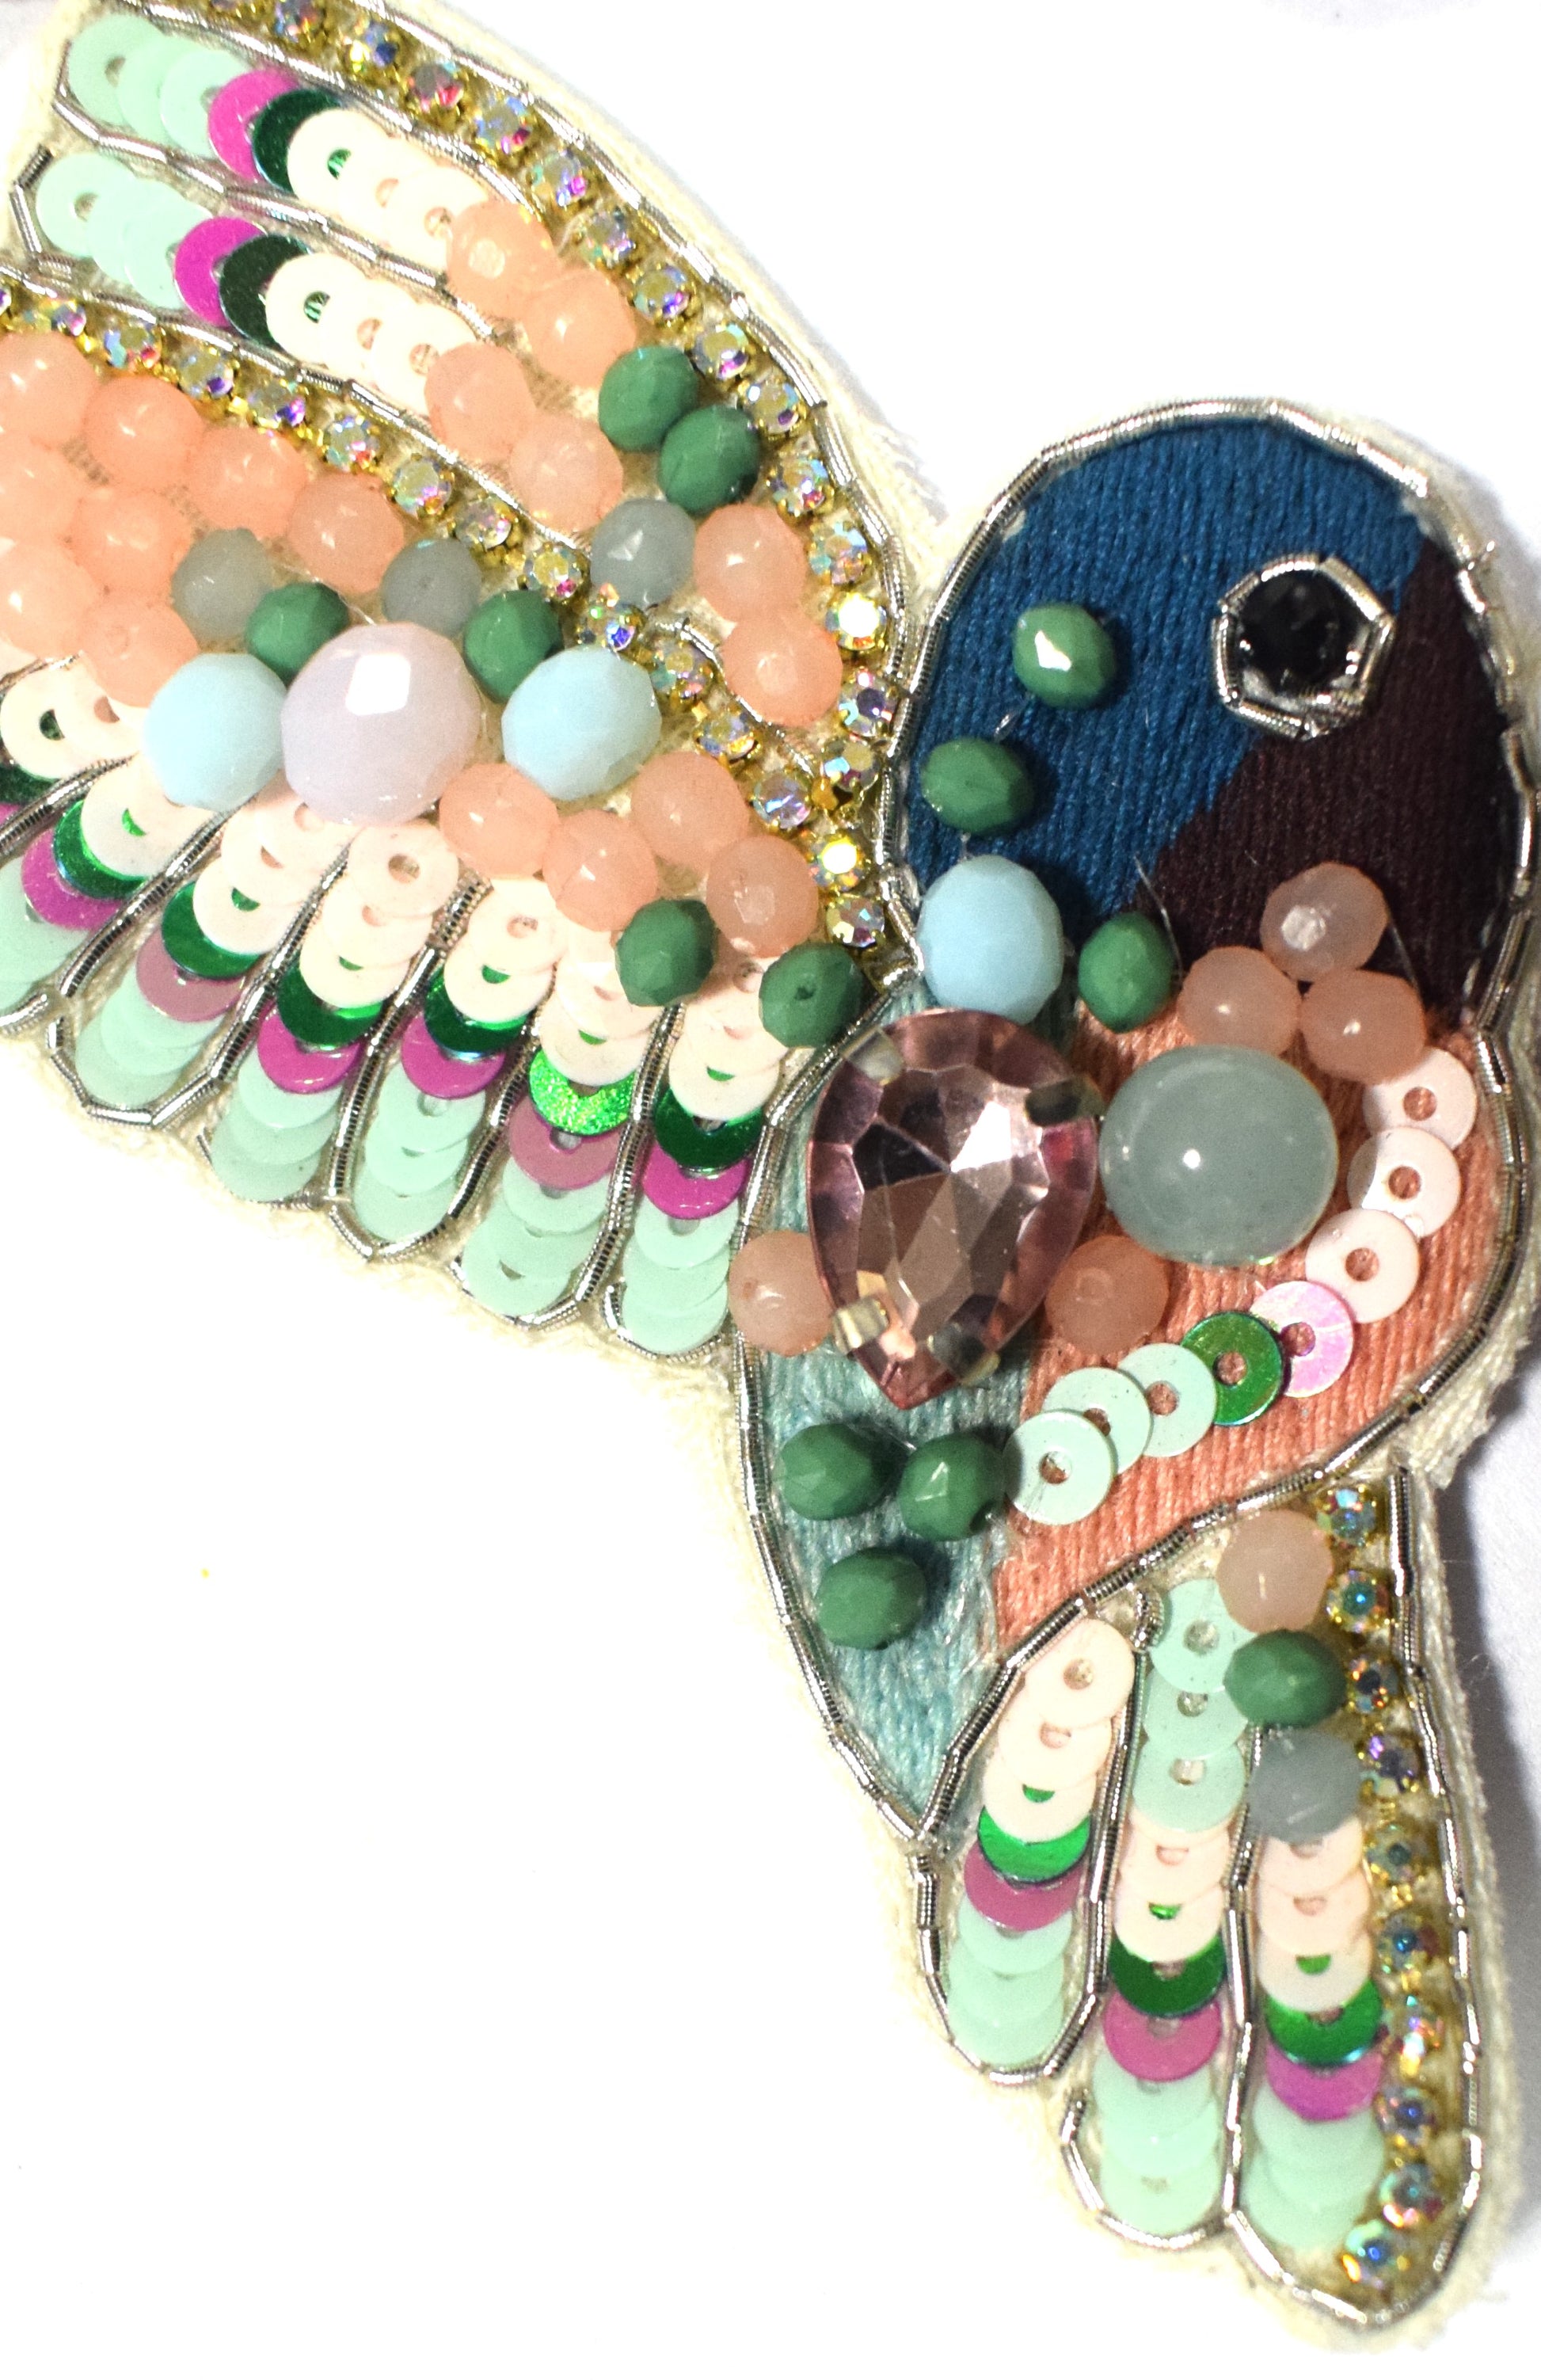 Flawless Handmade Beaded Bird Earrings For Women & Girls Being Flawless